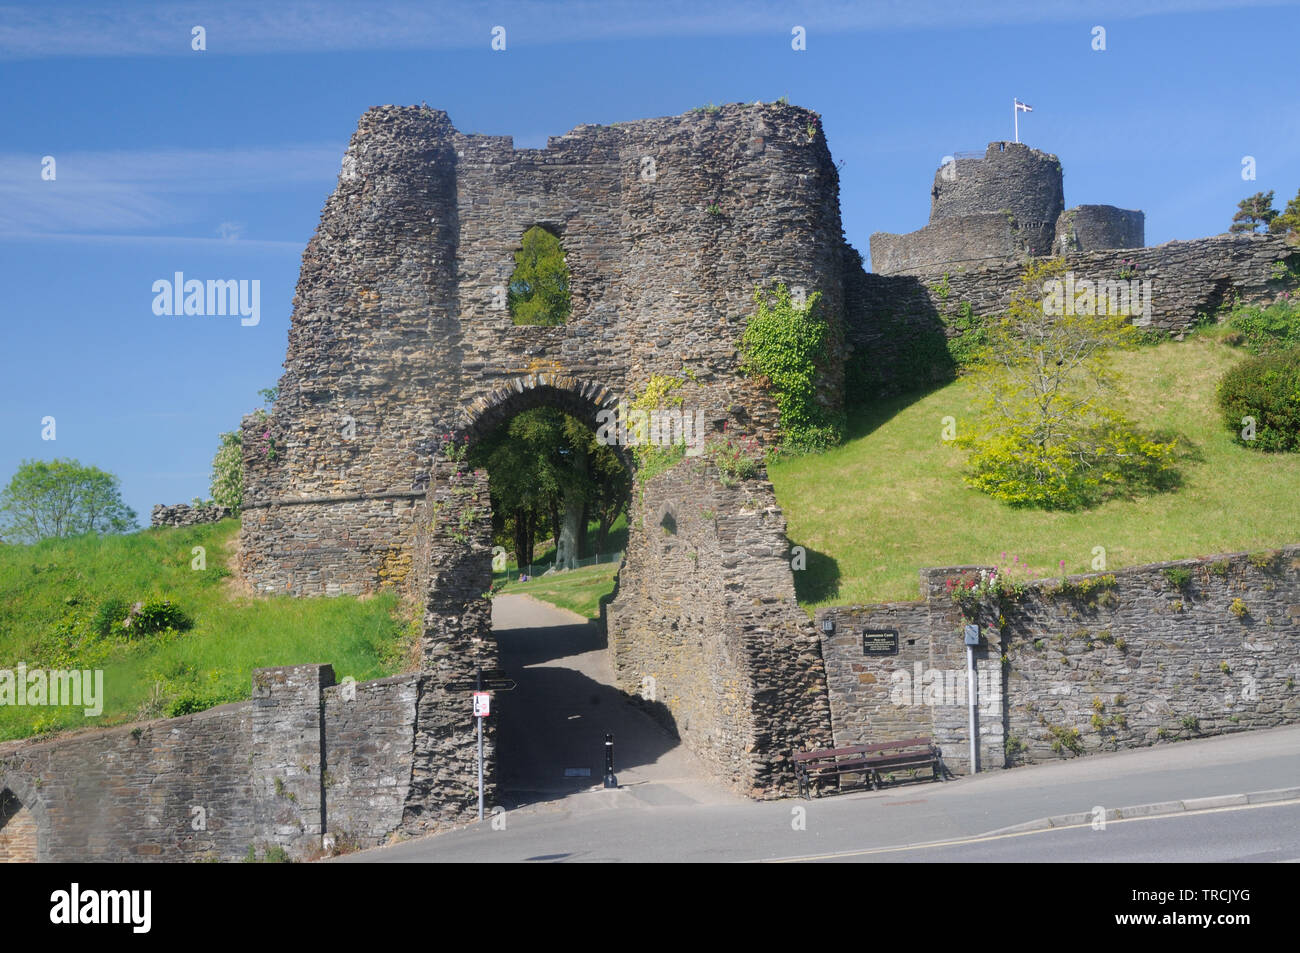 The Cornish flag flies over the ruins of Launceston Castle, in Launceston, Cornwall, England Stock Photo